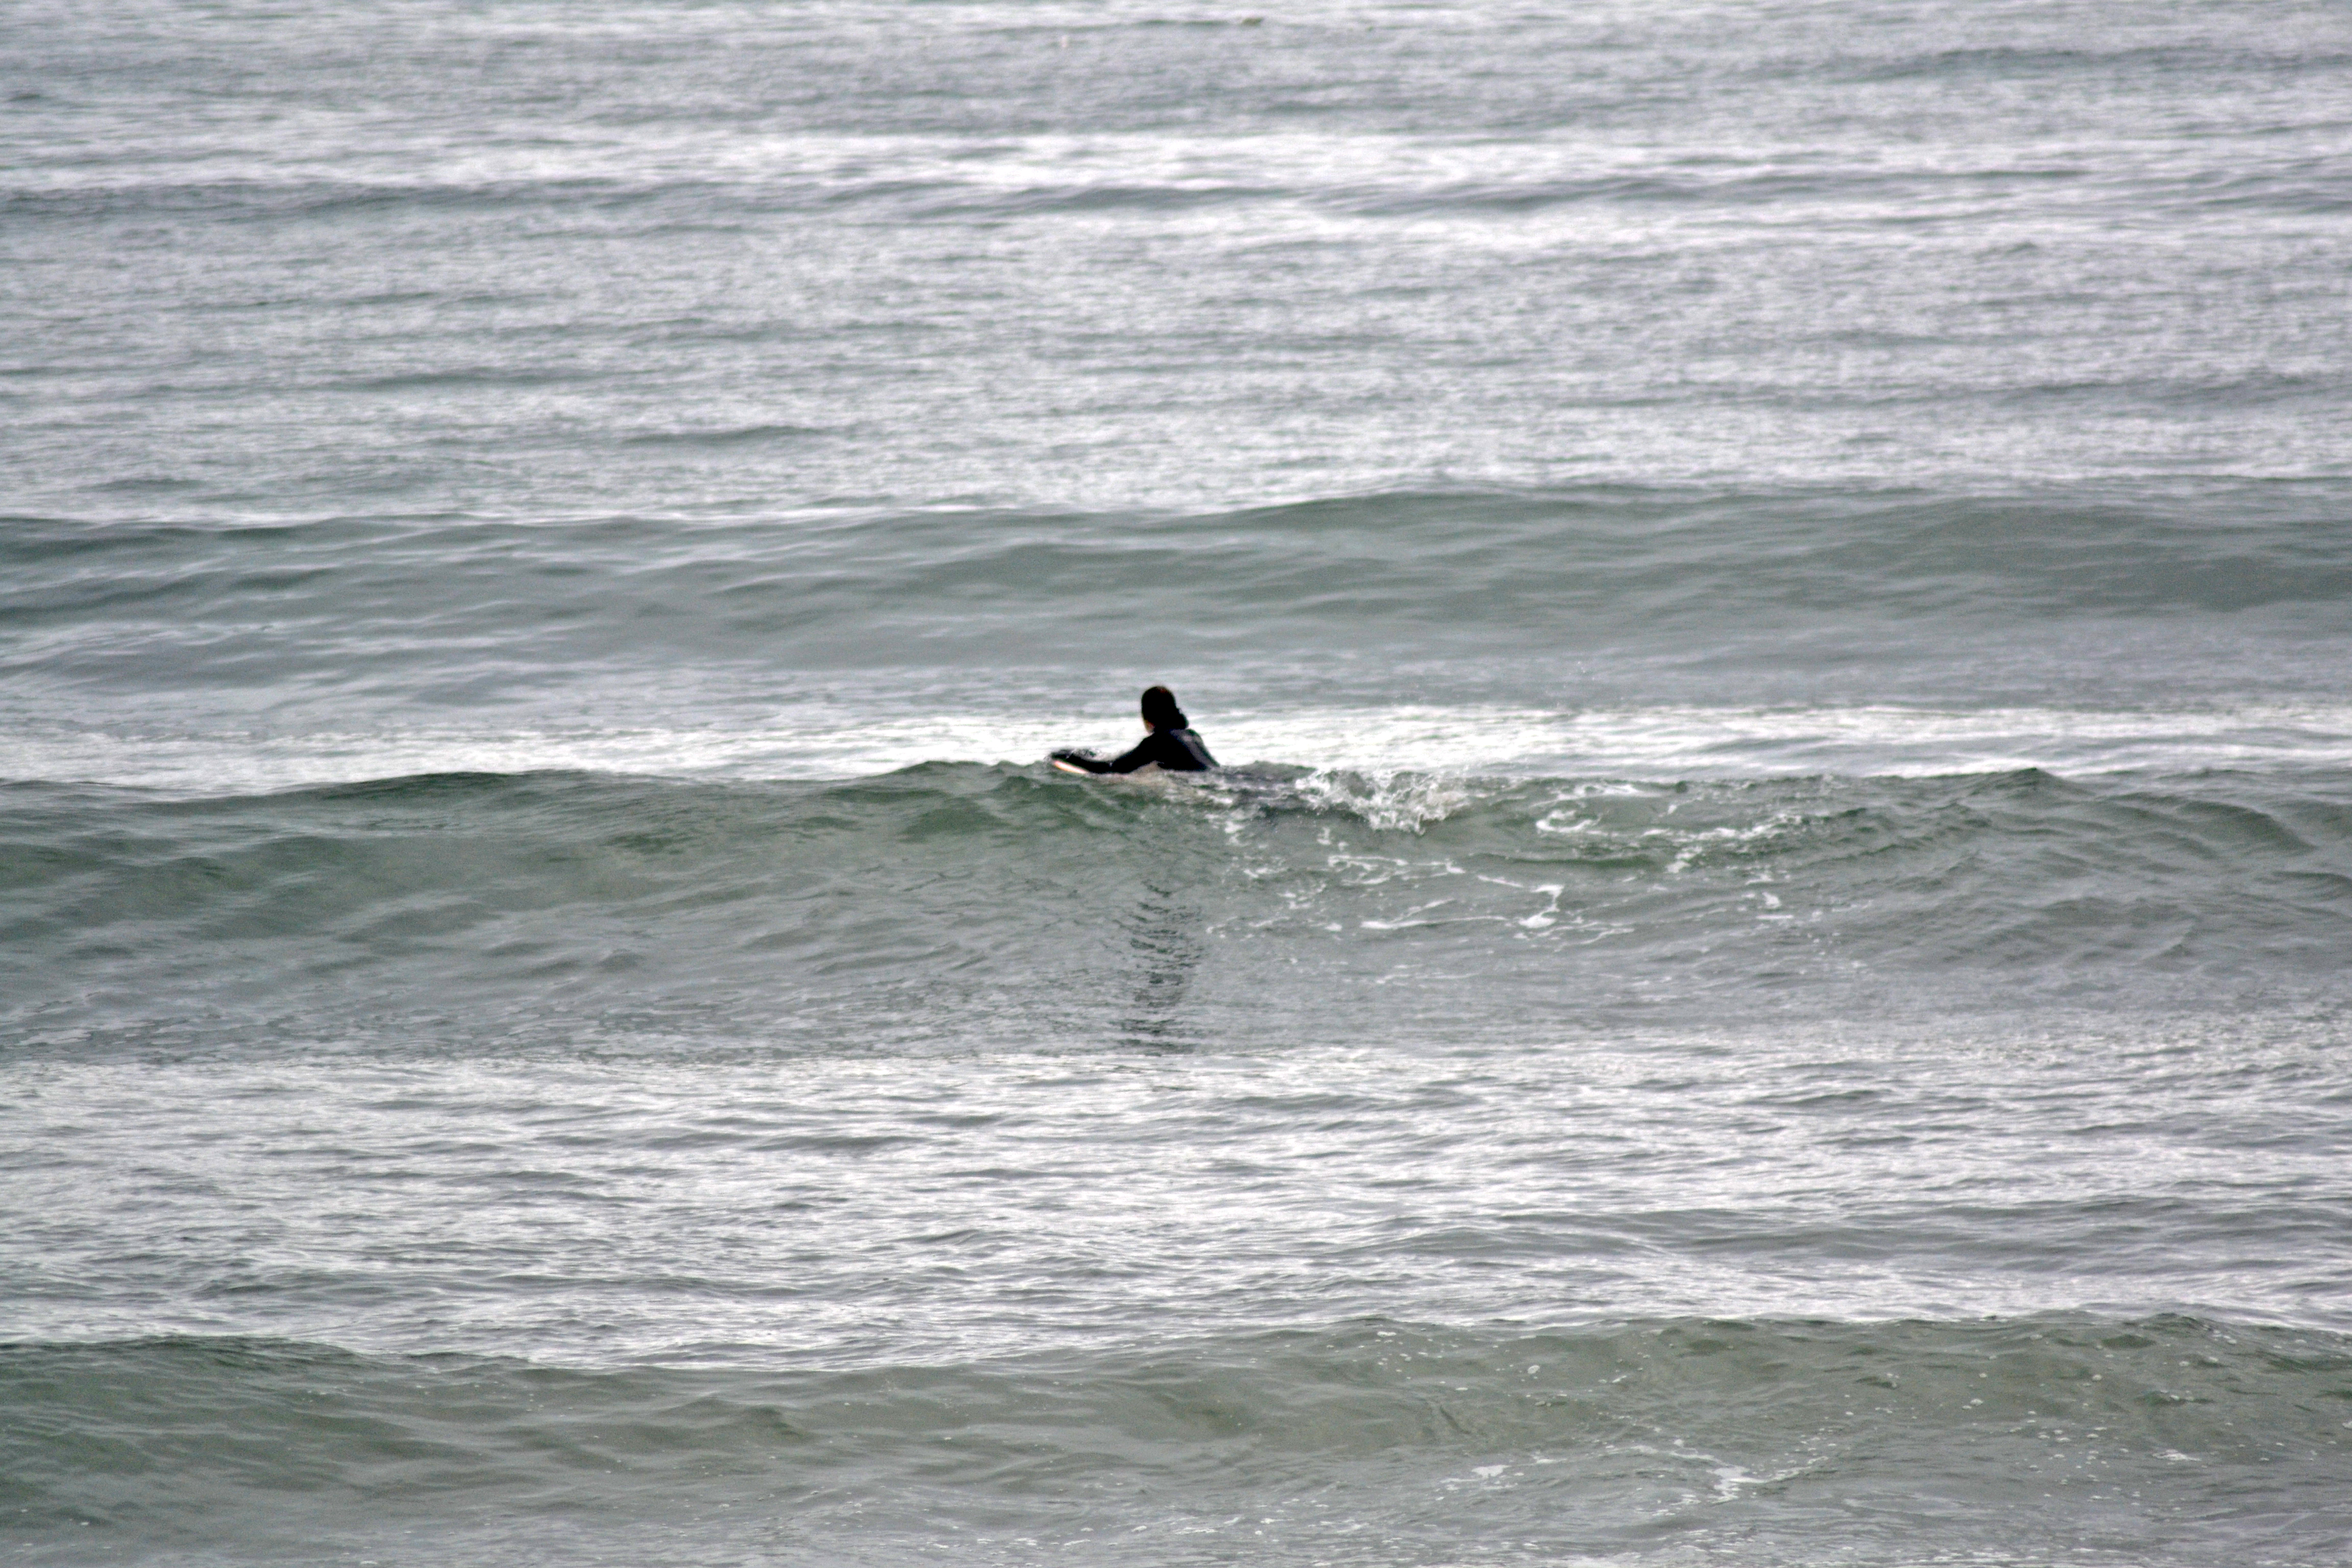 Little friendly waves photo